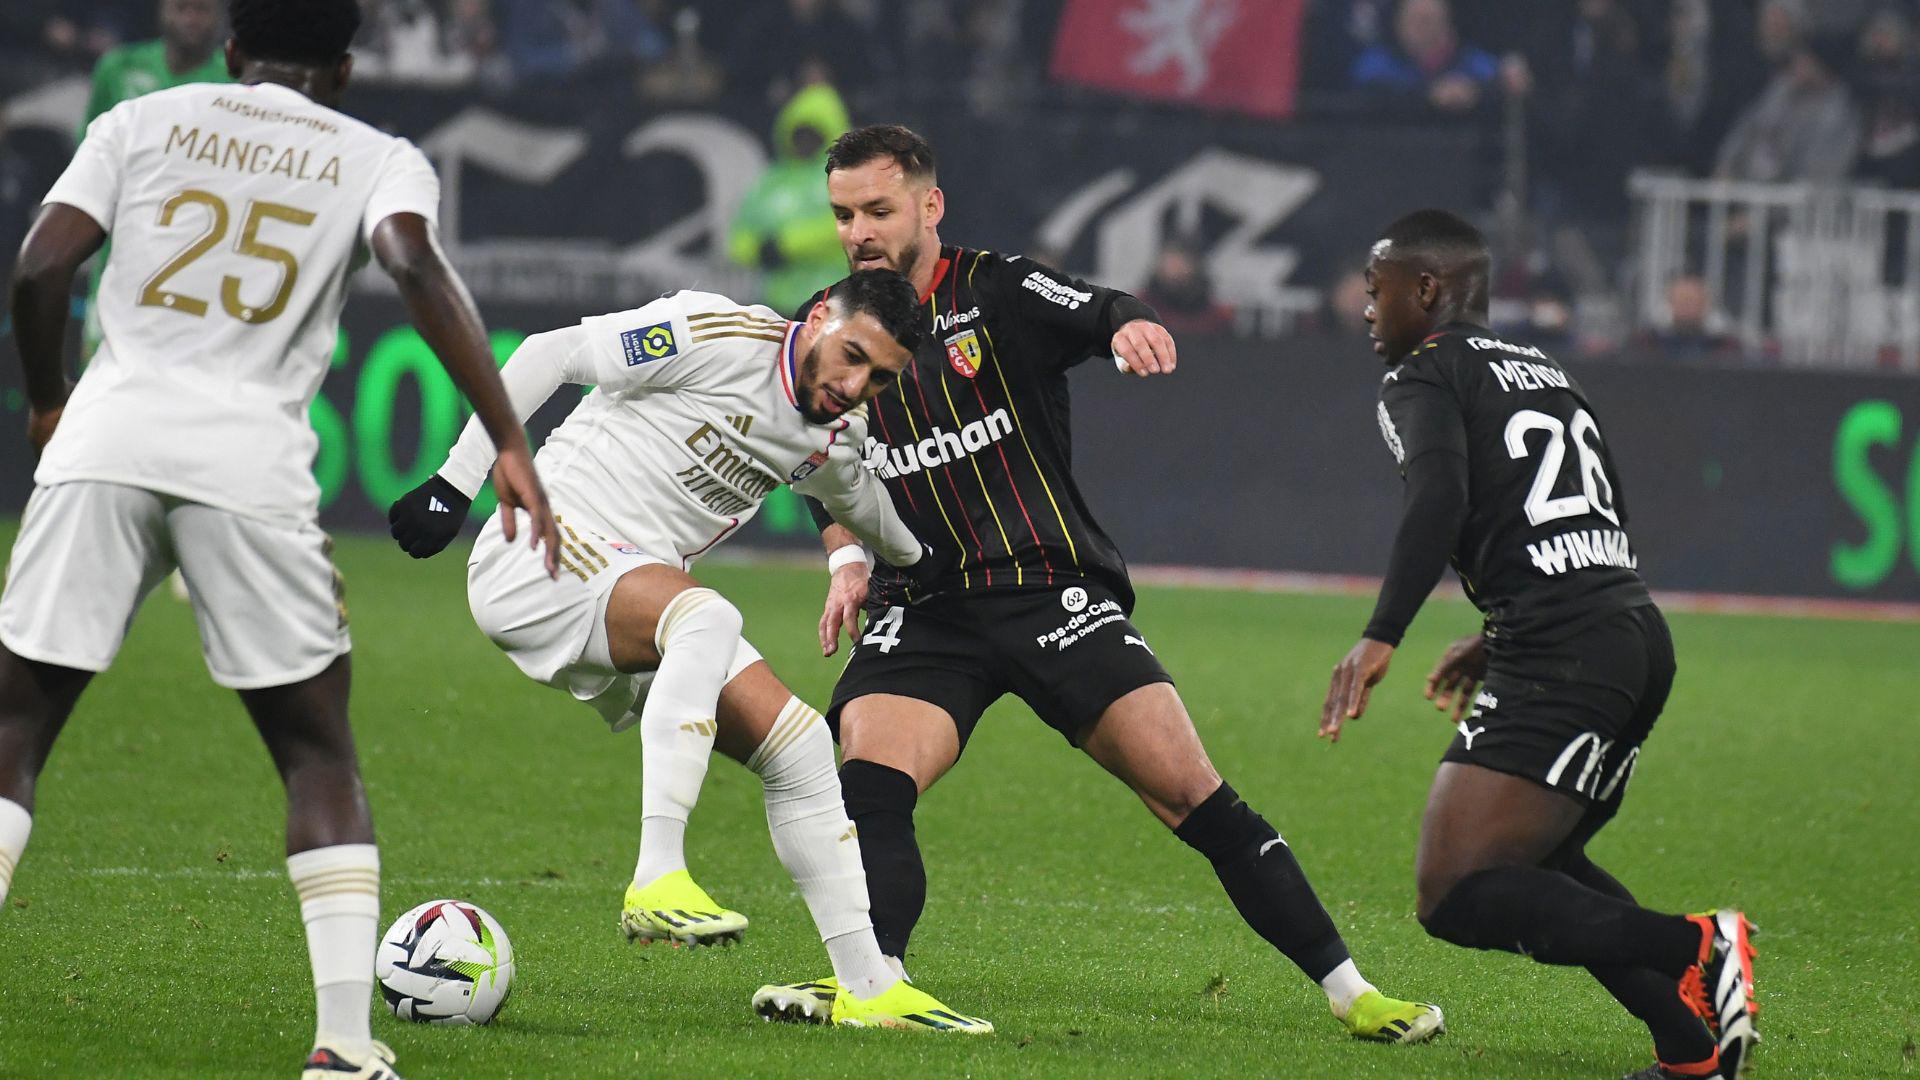 VIDEO | Ligue 1 Highlights: Lyon vs Lens